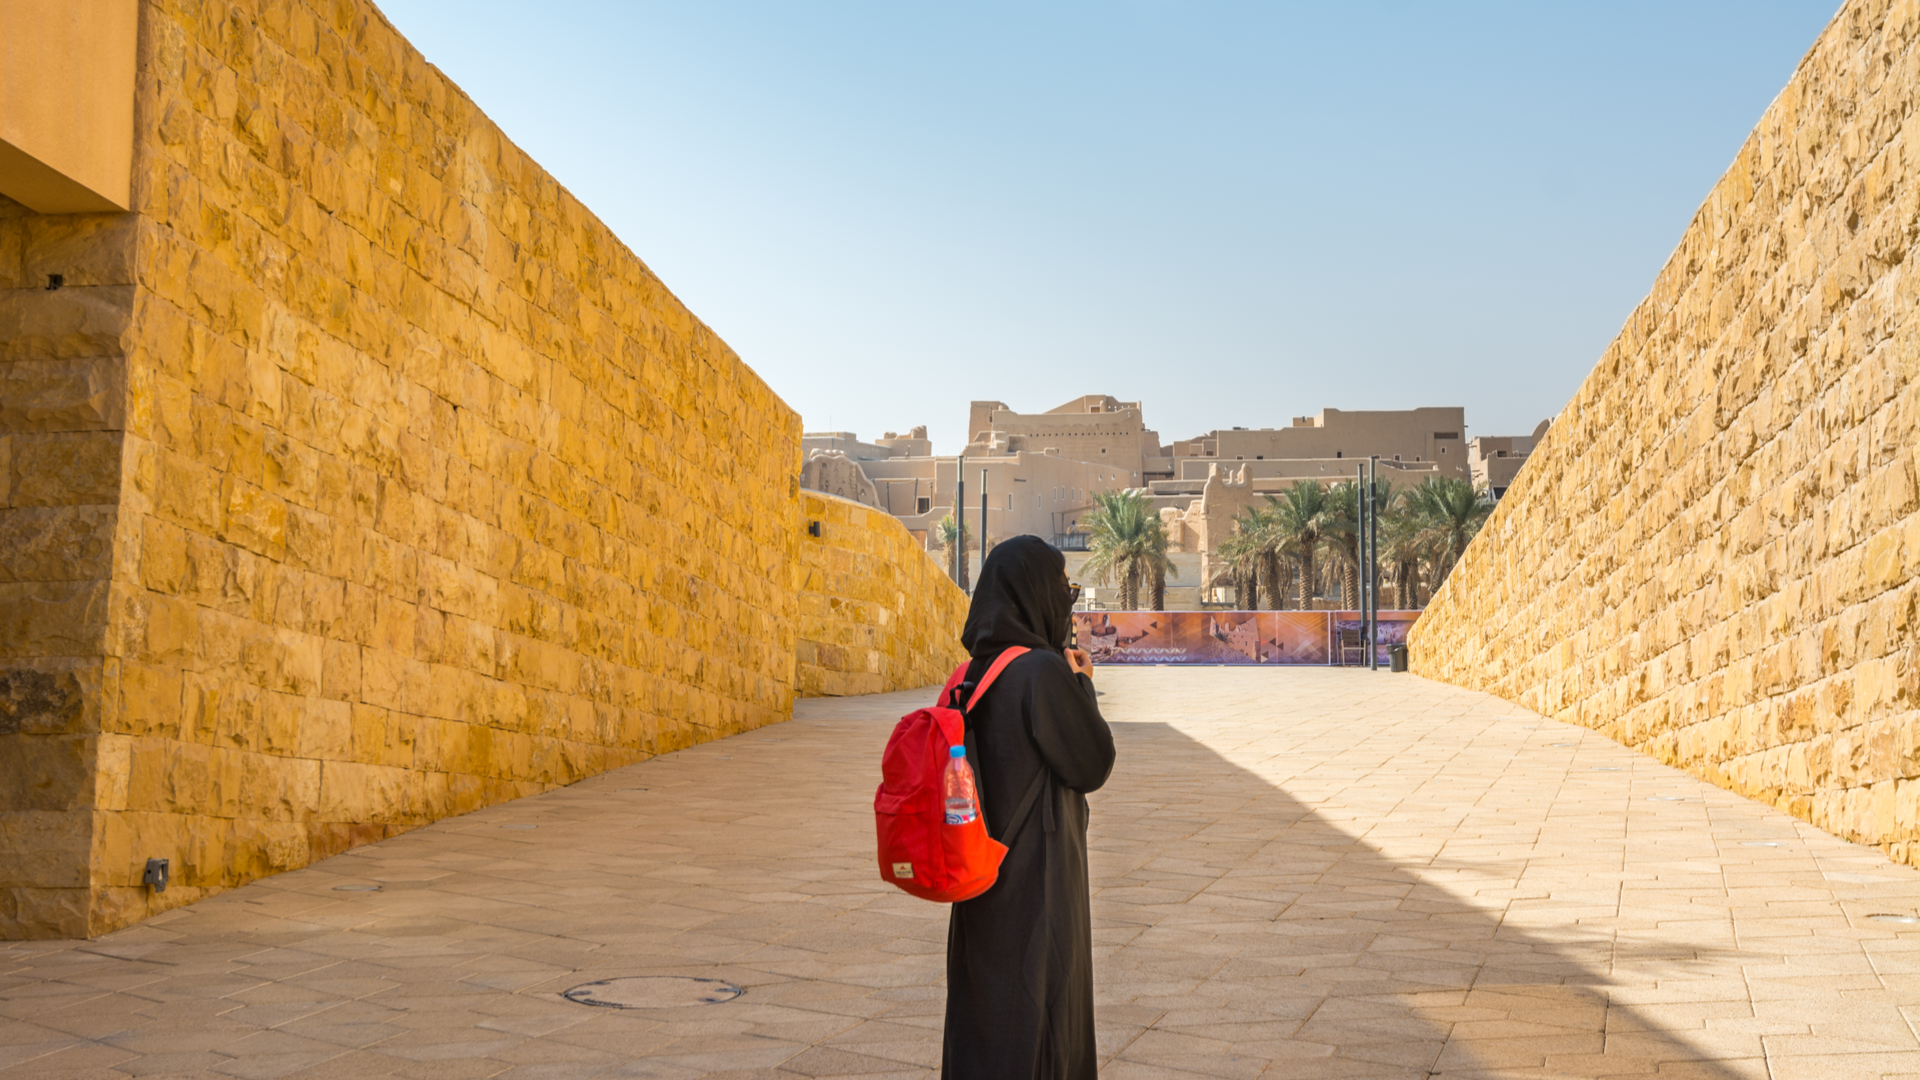 Saudi Arabia allows women to travel independently